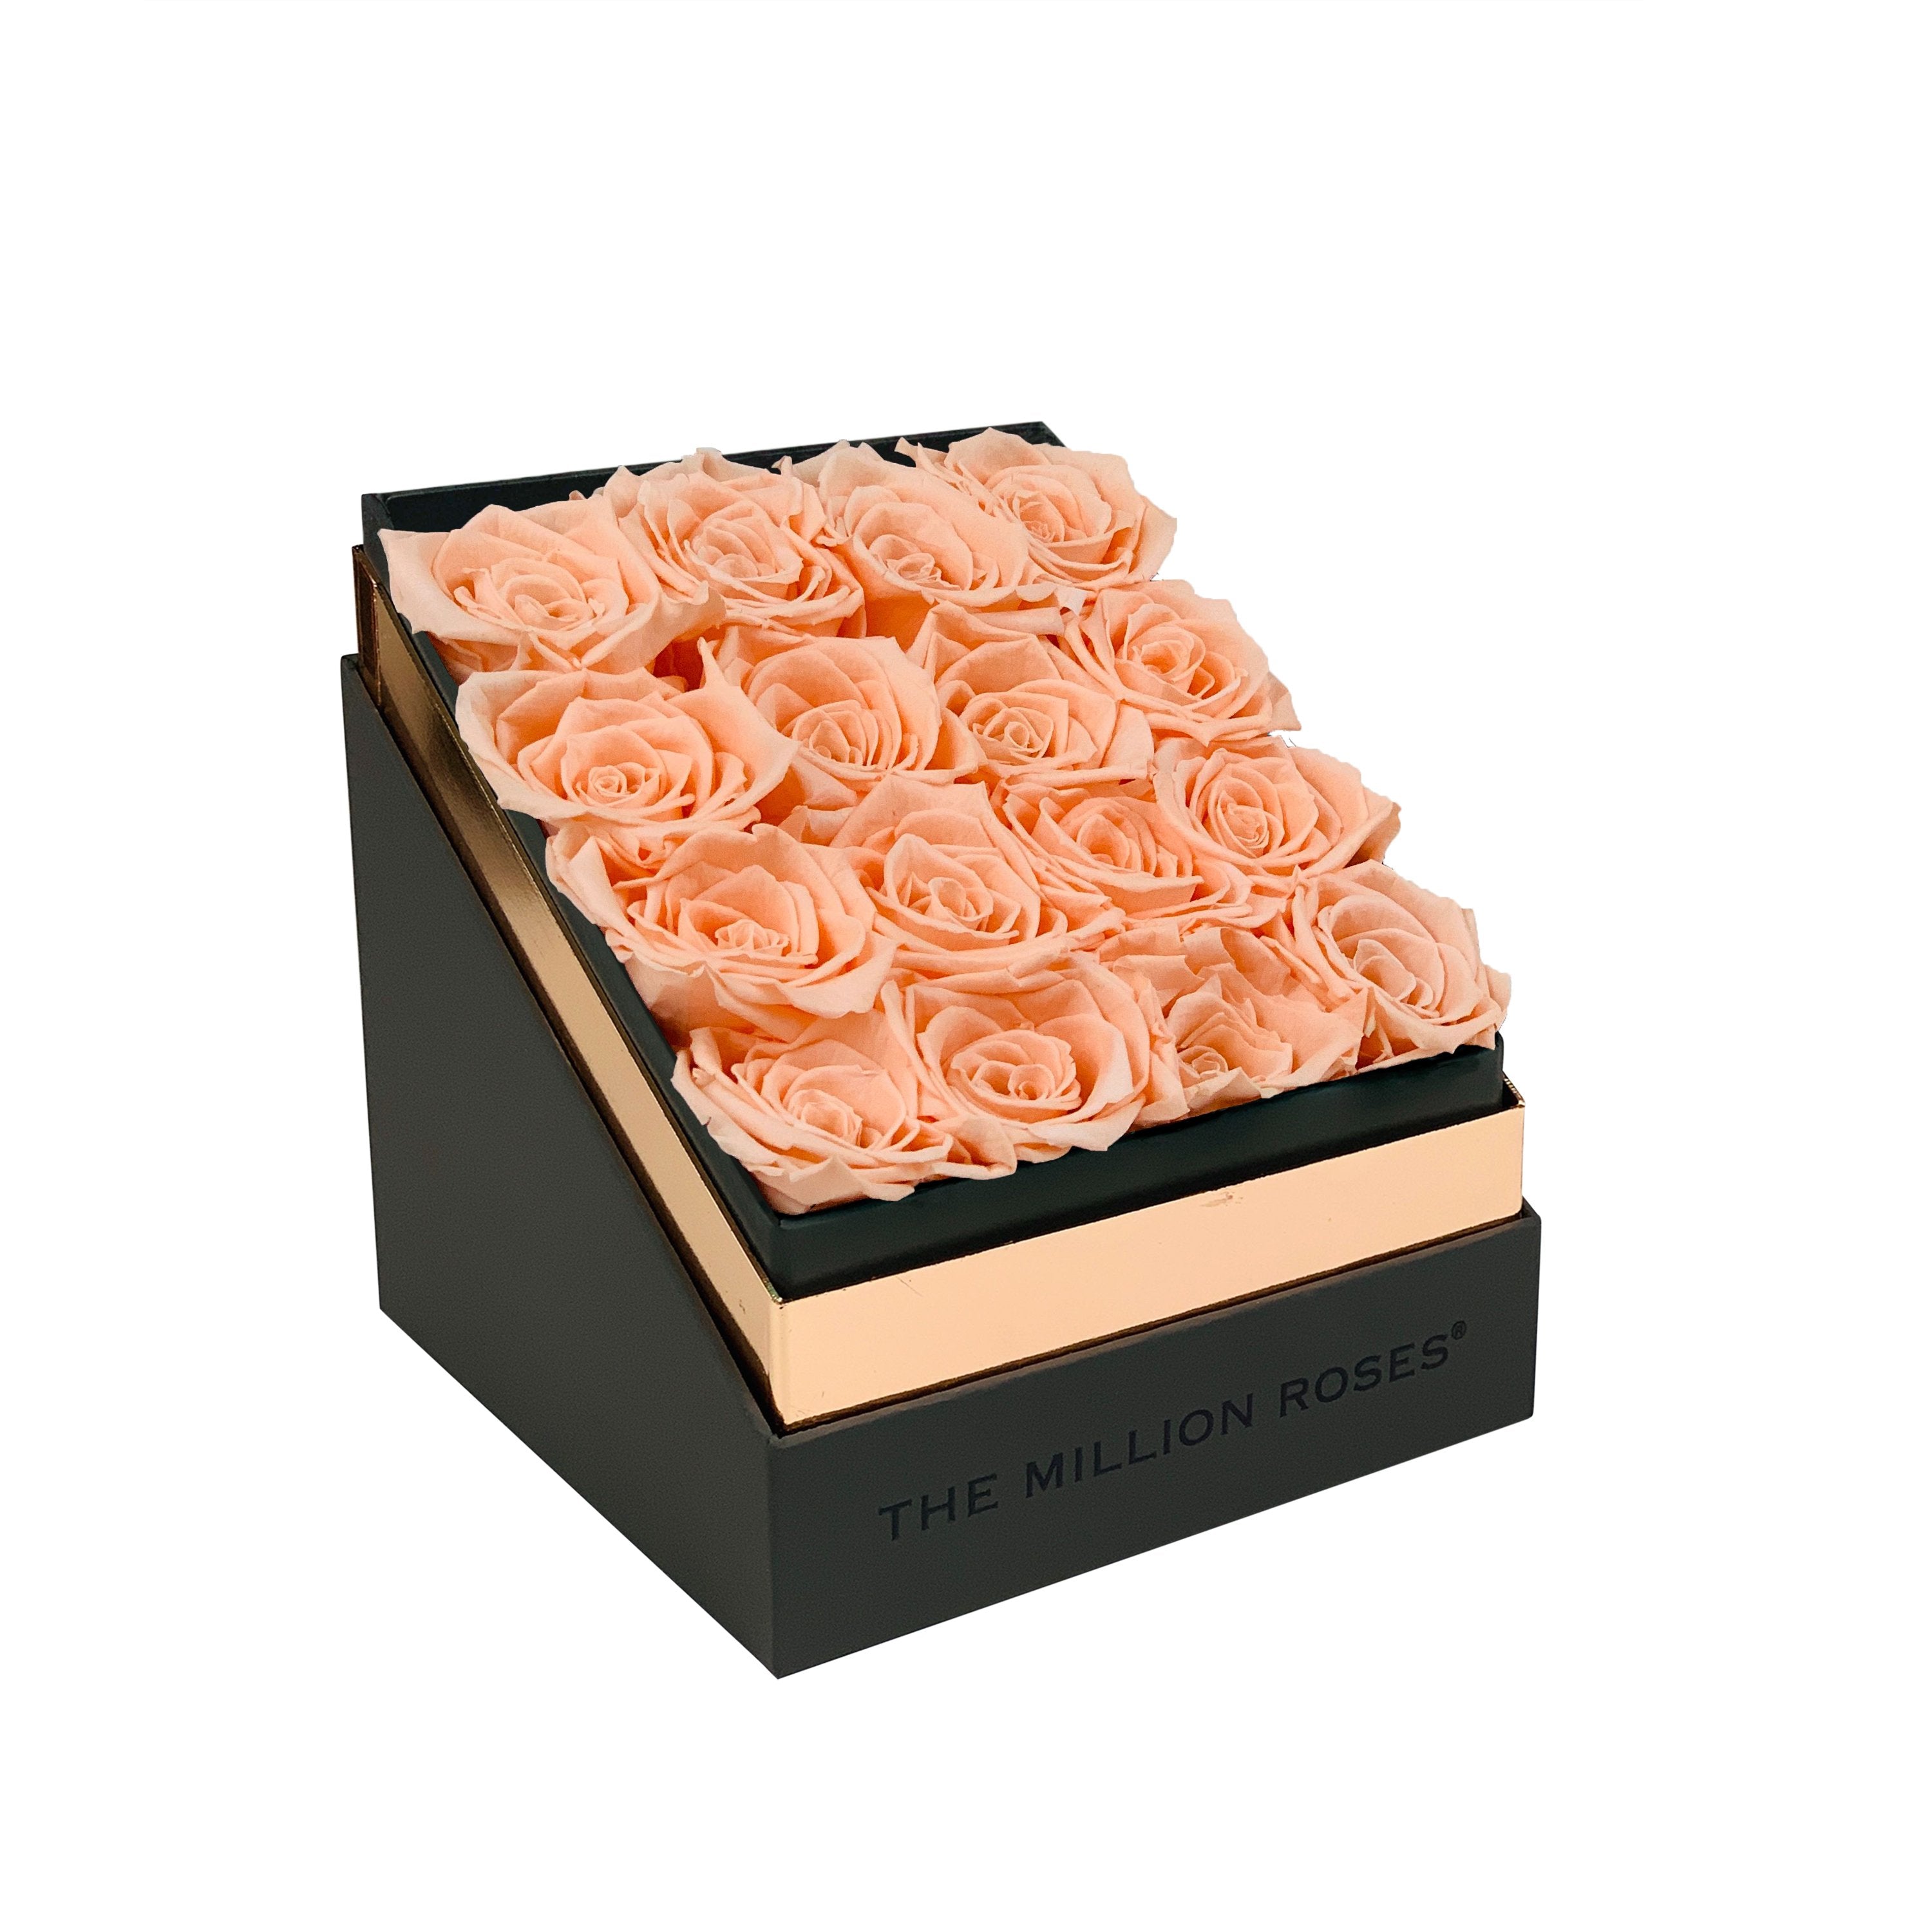 The Square - Gray Box - Peach Roses